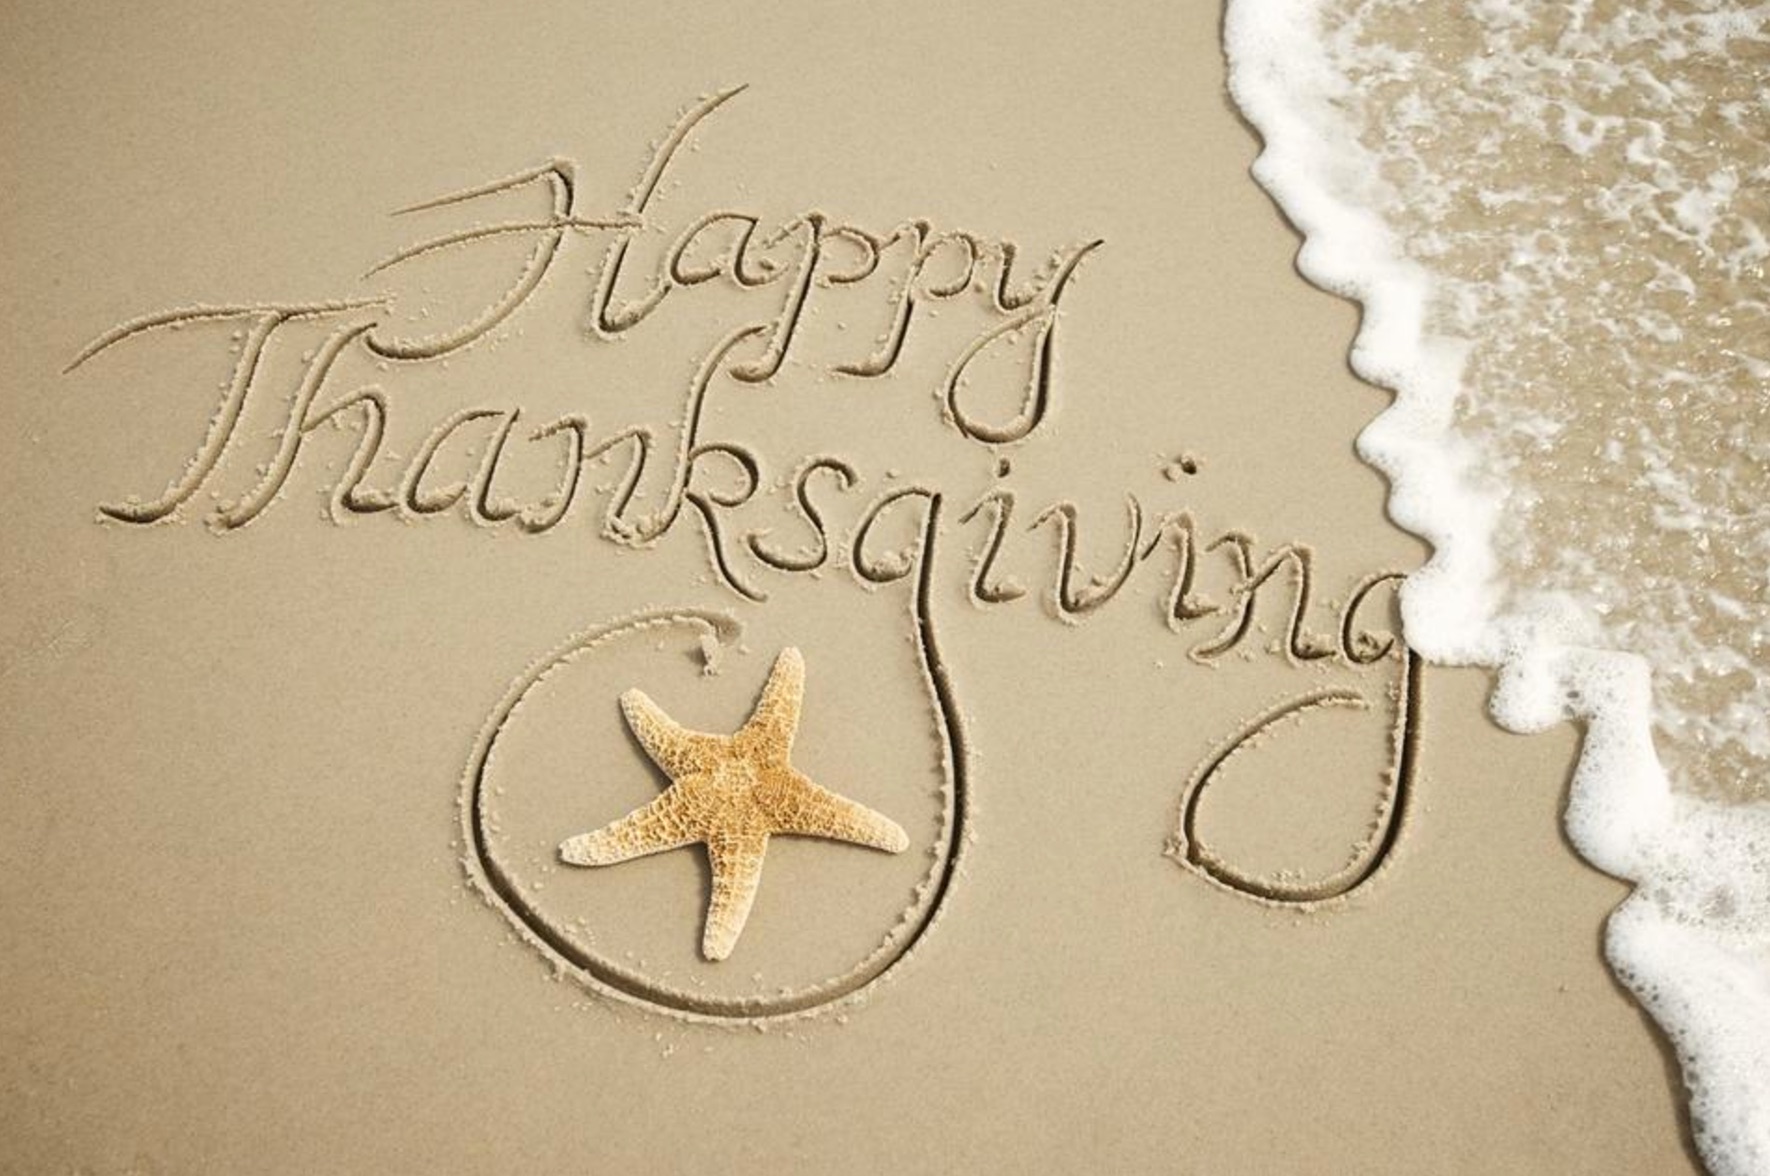 11-23-2017-Happy-Thanksgiving-sand-writing.jpg